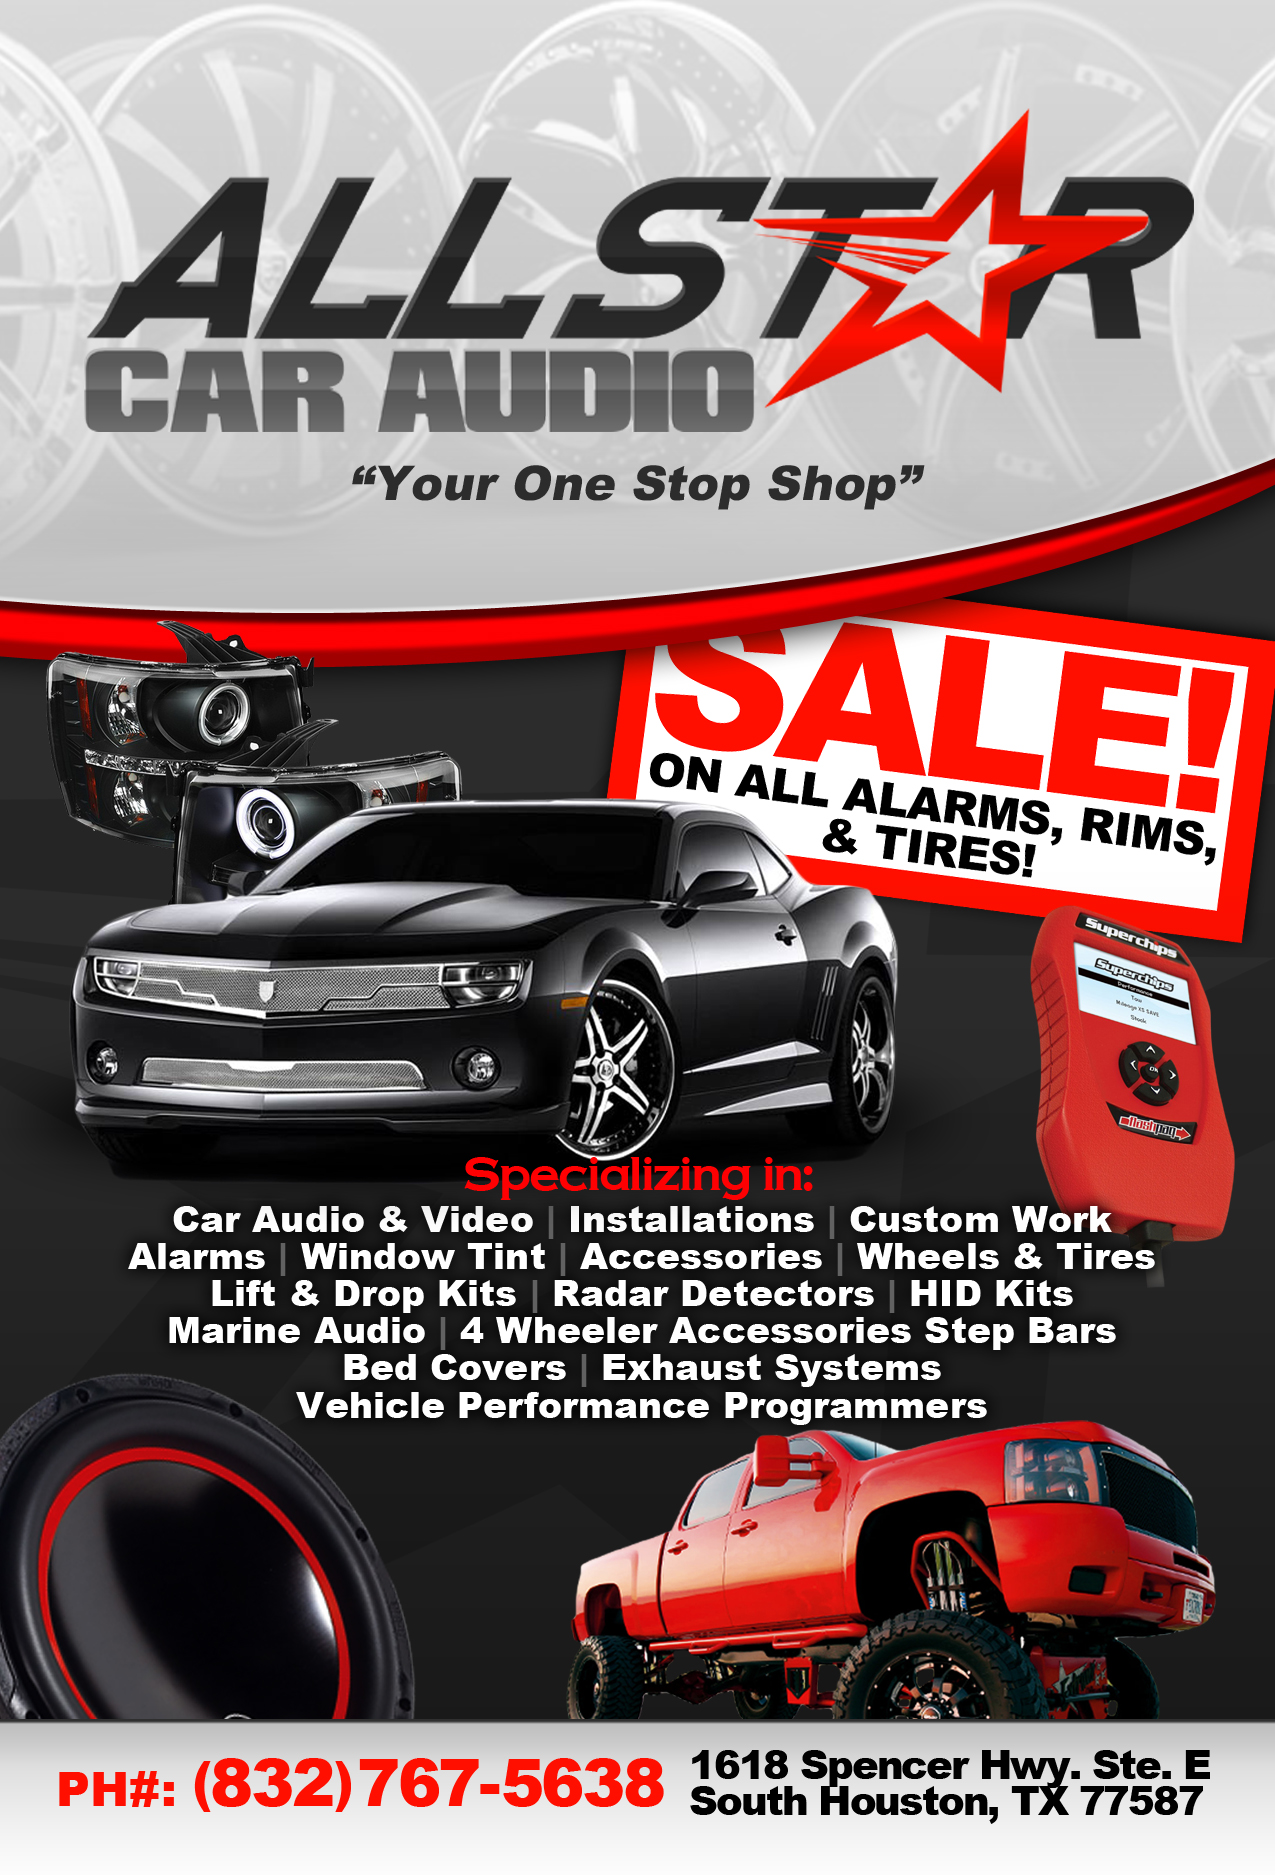 All Star Car Audio - South Houston, TX 77587